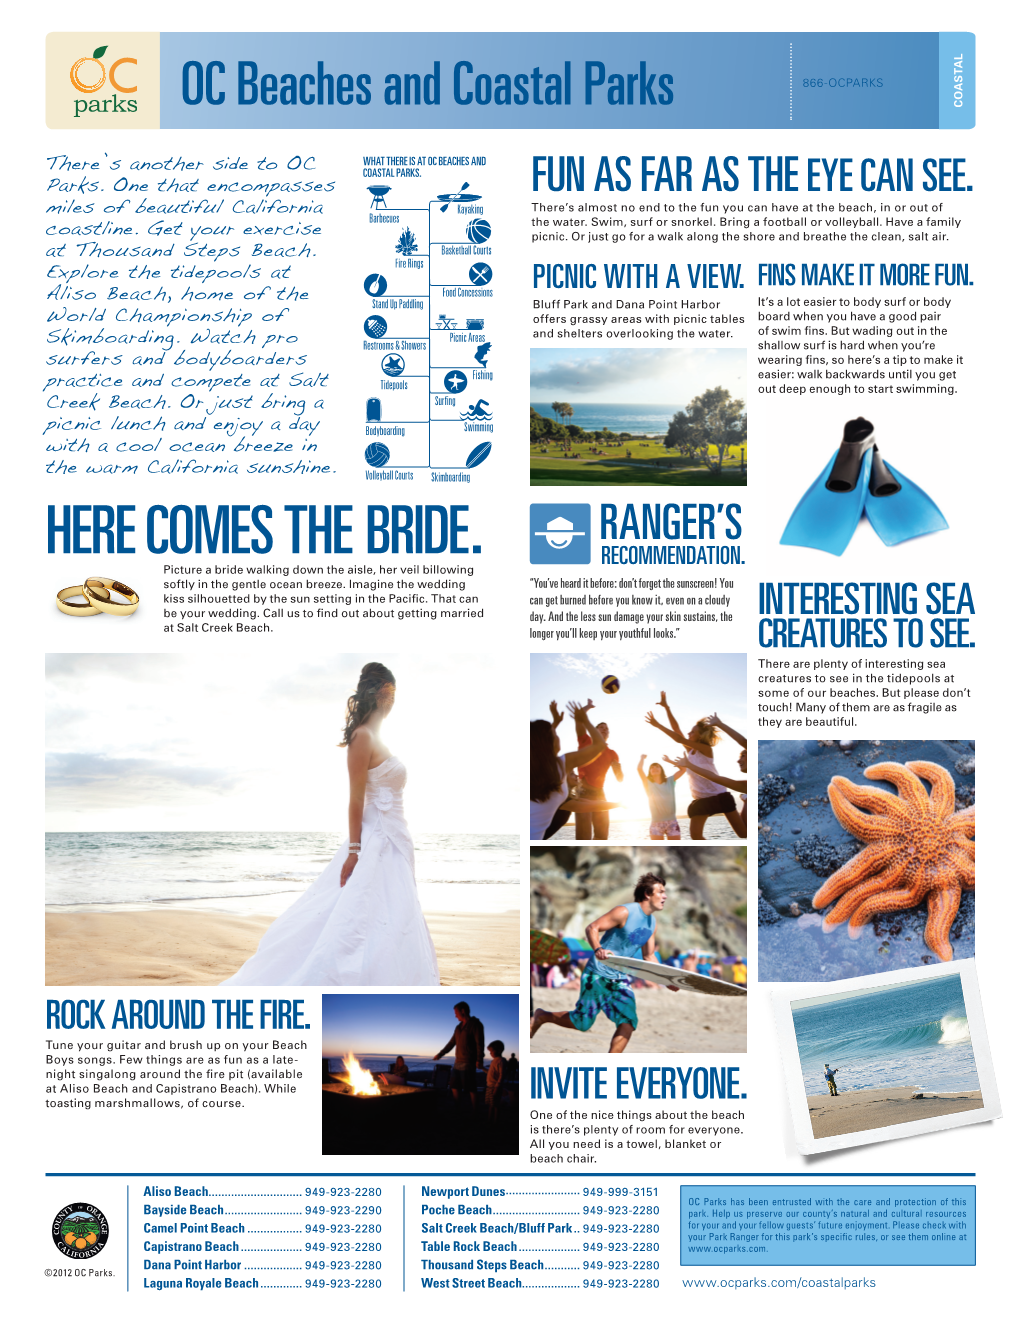 OC Beaches Brochure